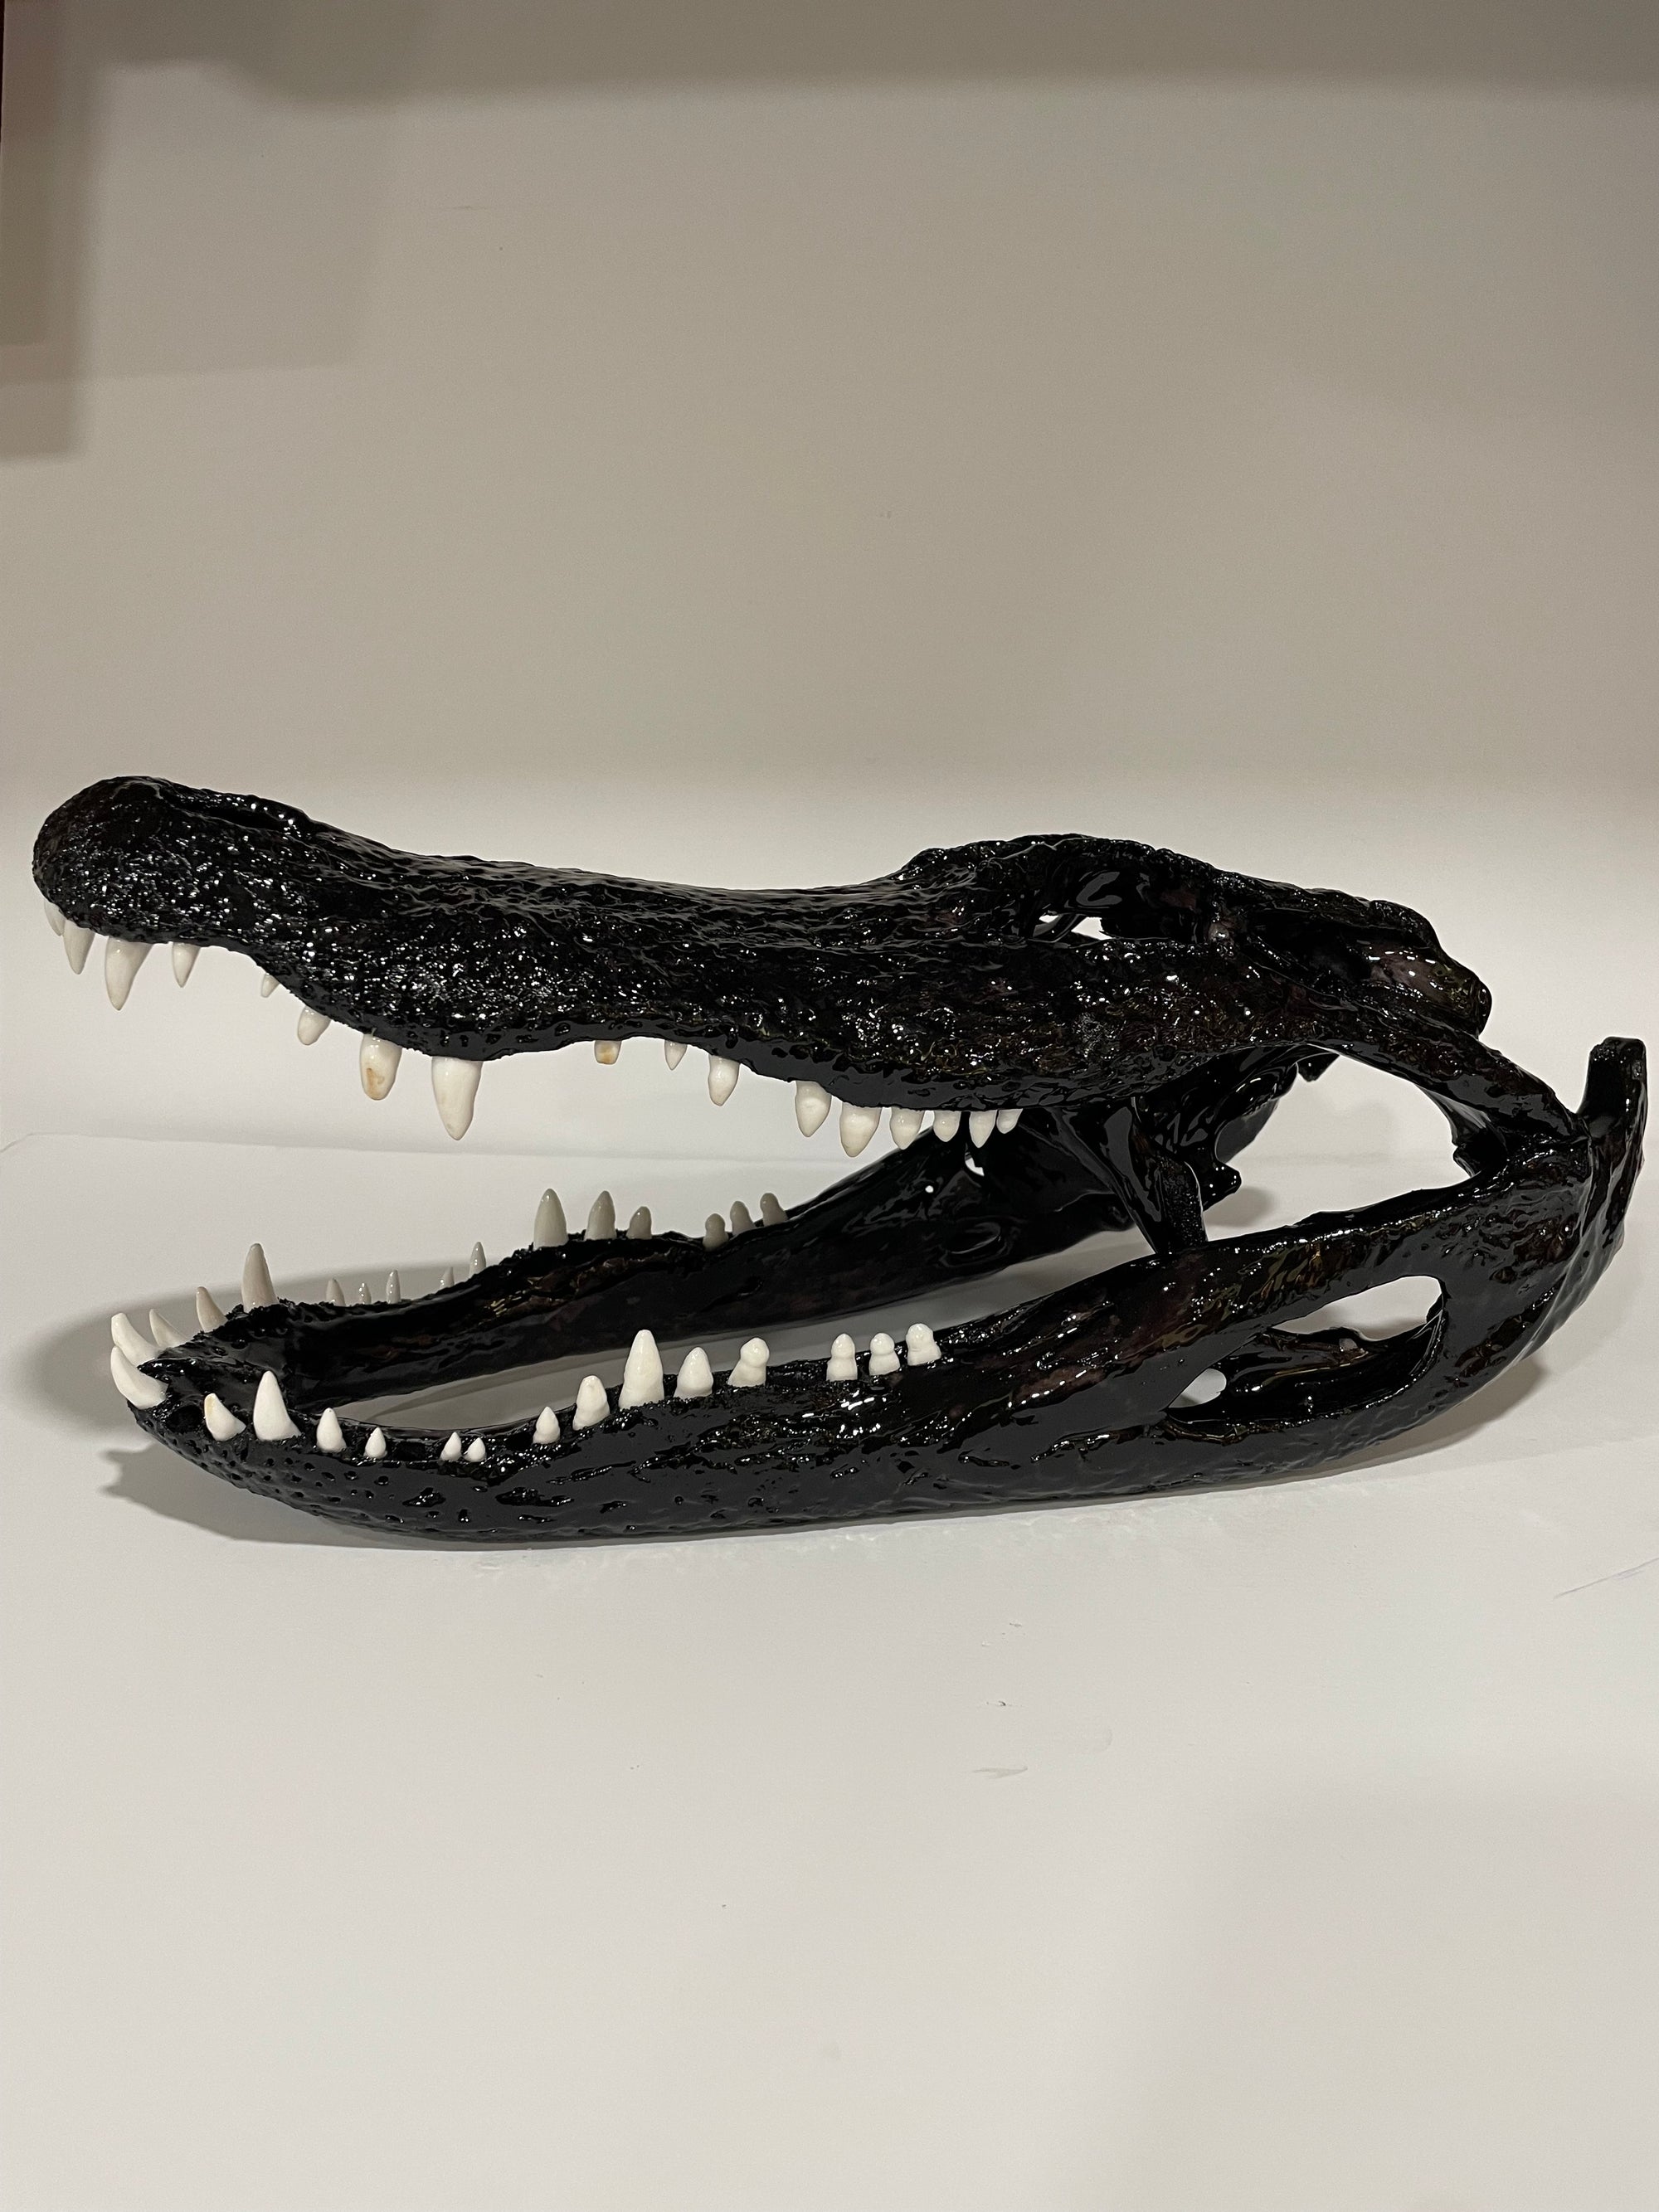 Alligator head black shiny finish 14x6.5x6.5